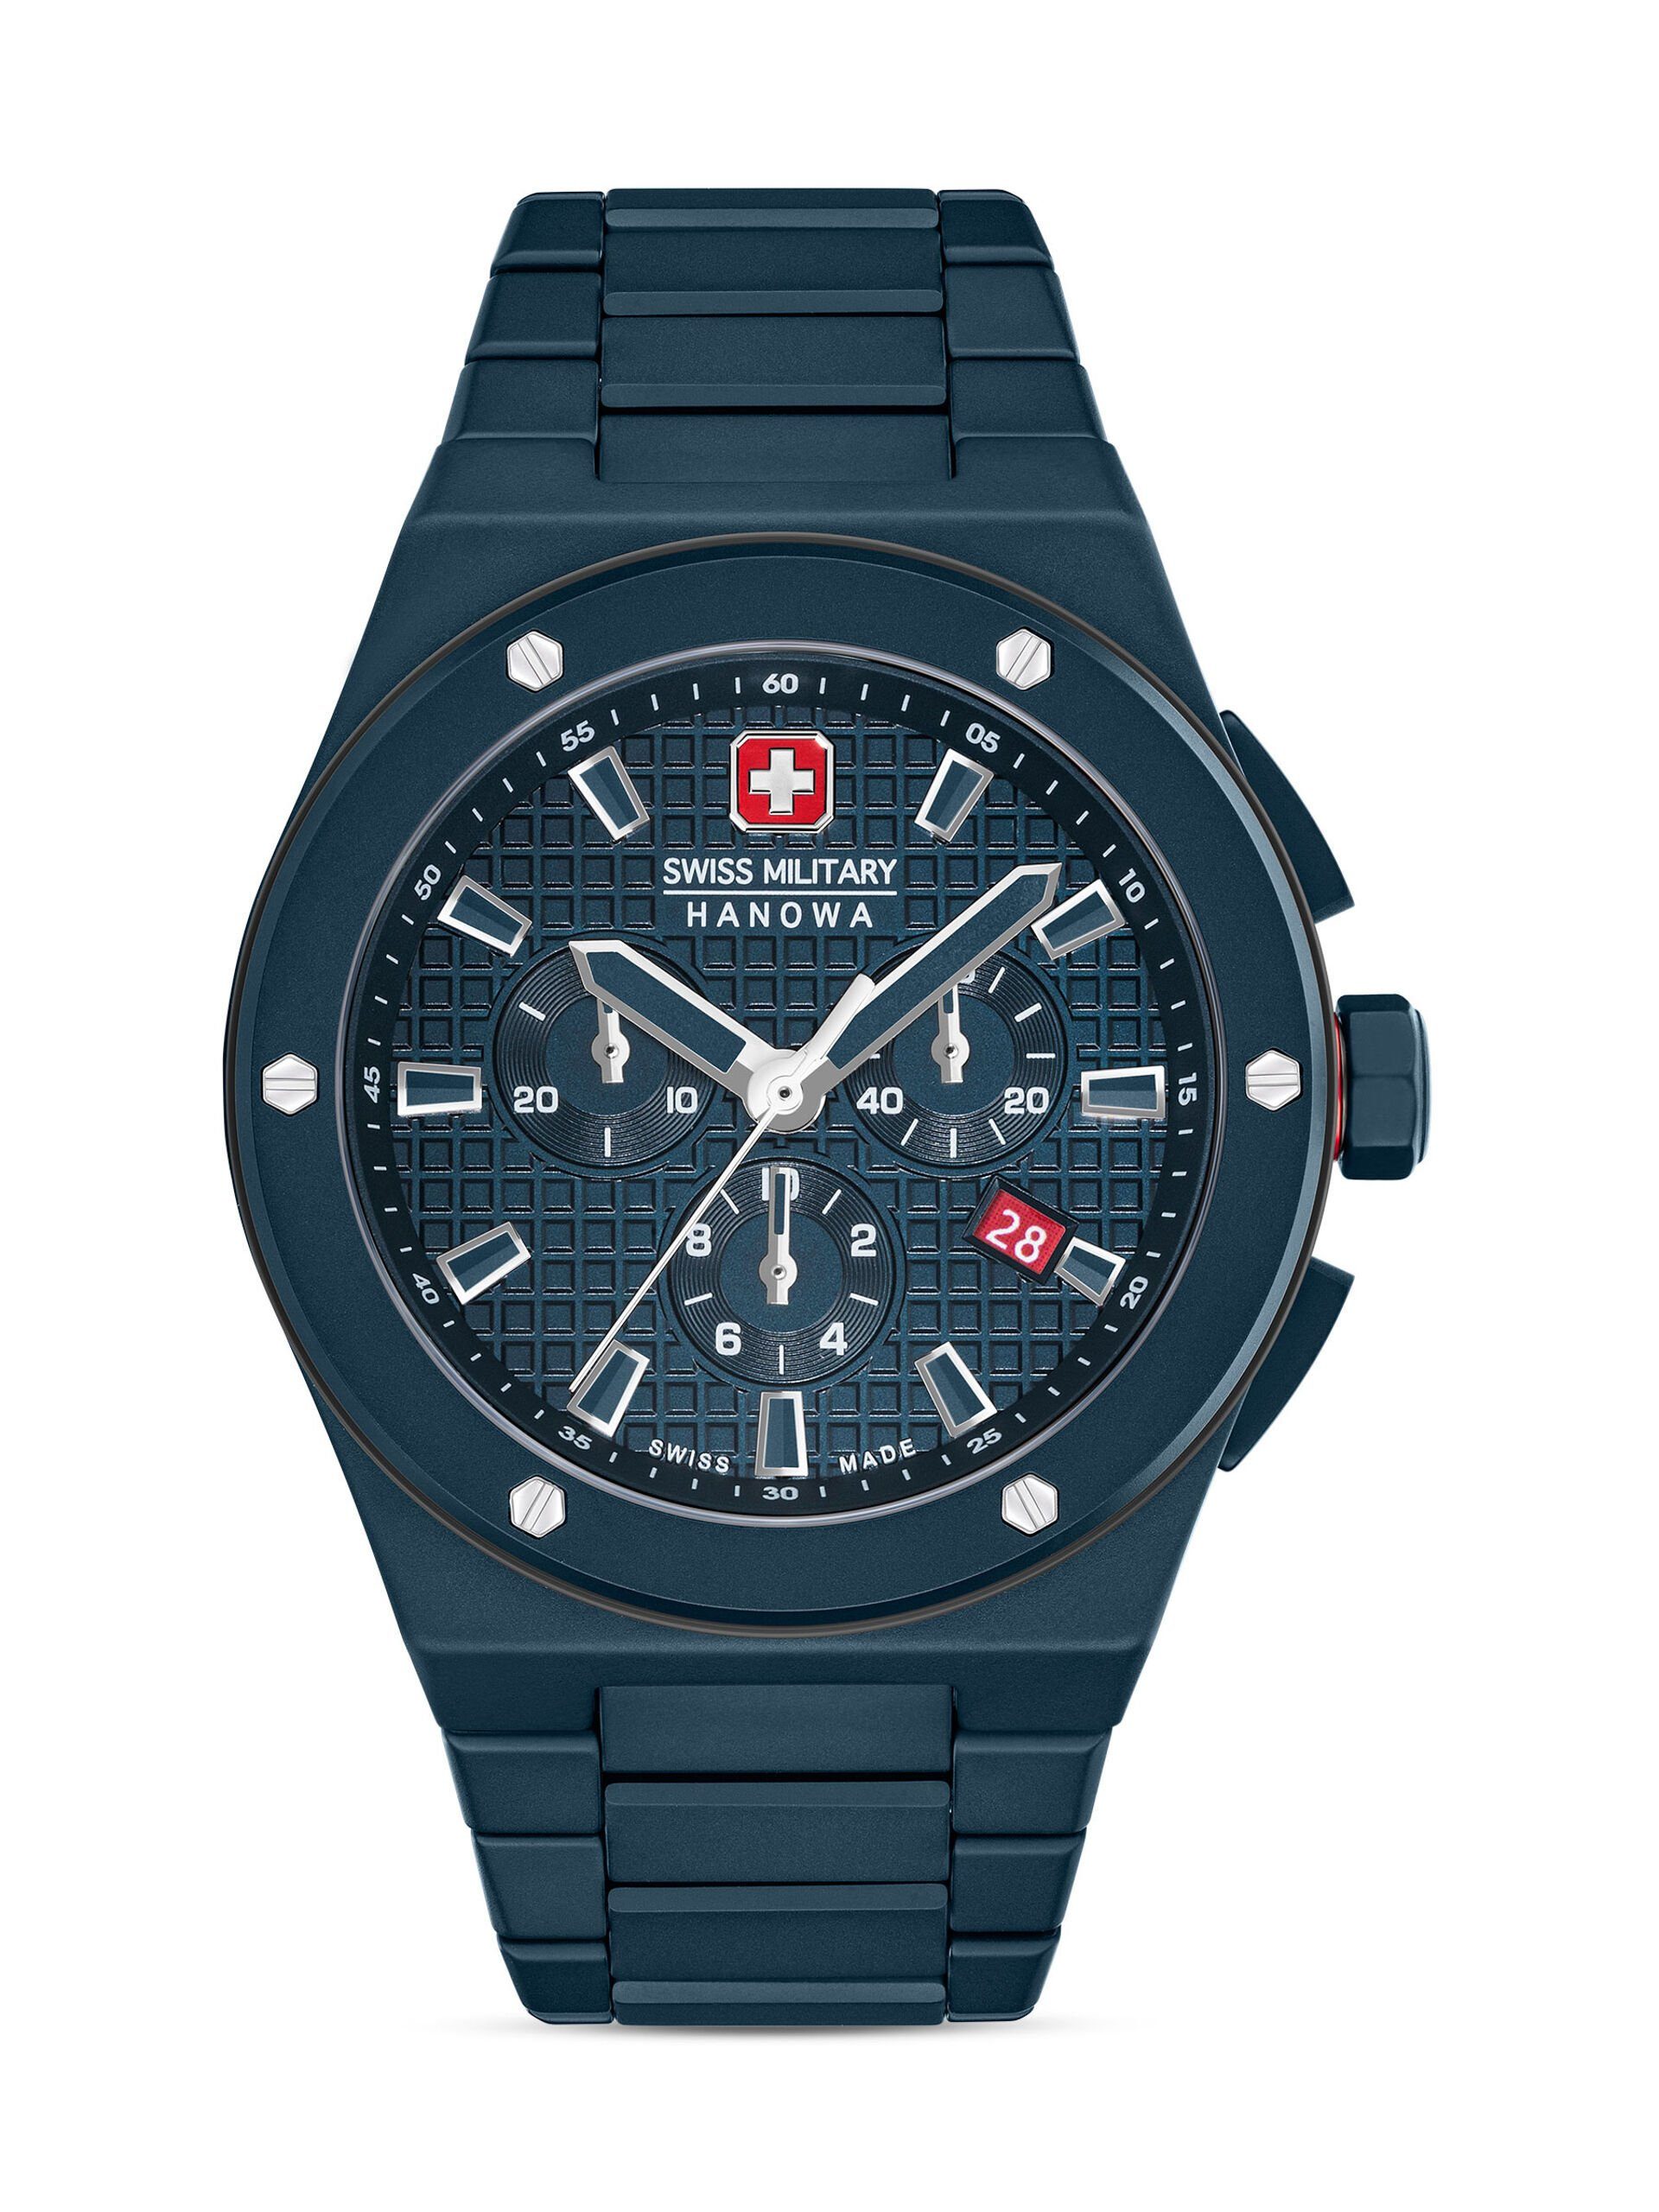 Swiss Military Hanowa Quarzuhr CERAMIC, CERAMIC-Armband mit SIDEWINDER hochwertigem Blau